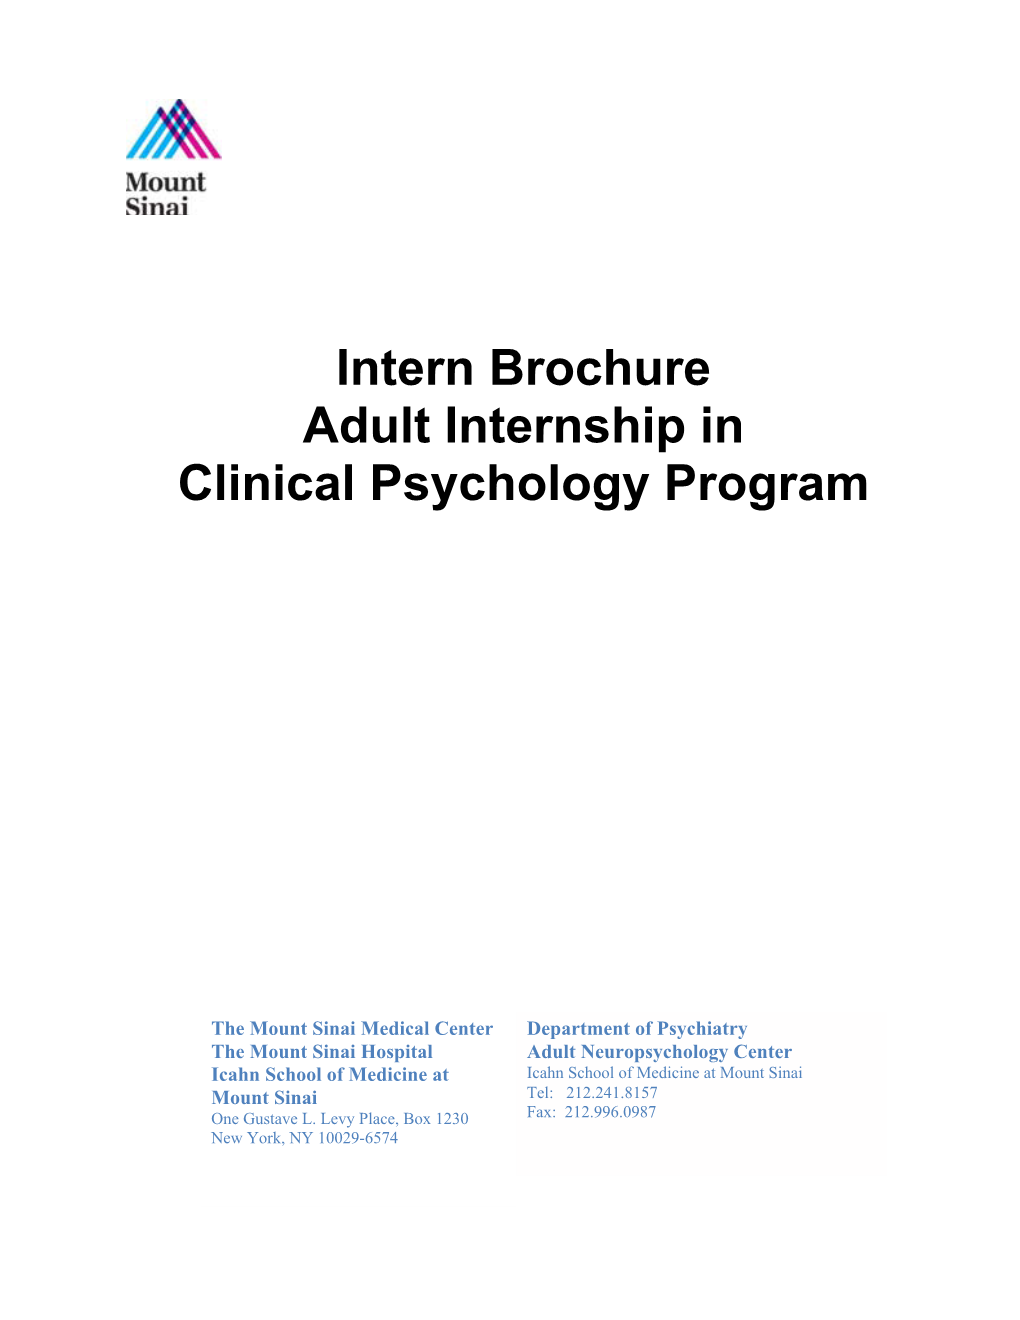 Intern Brochure Adult Internship in Clinical Psychology Program